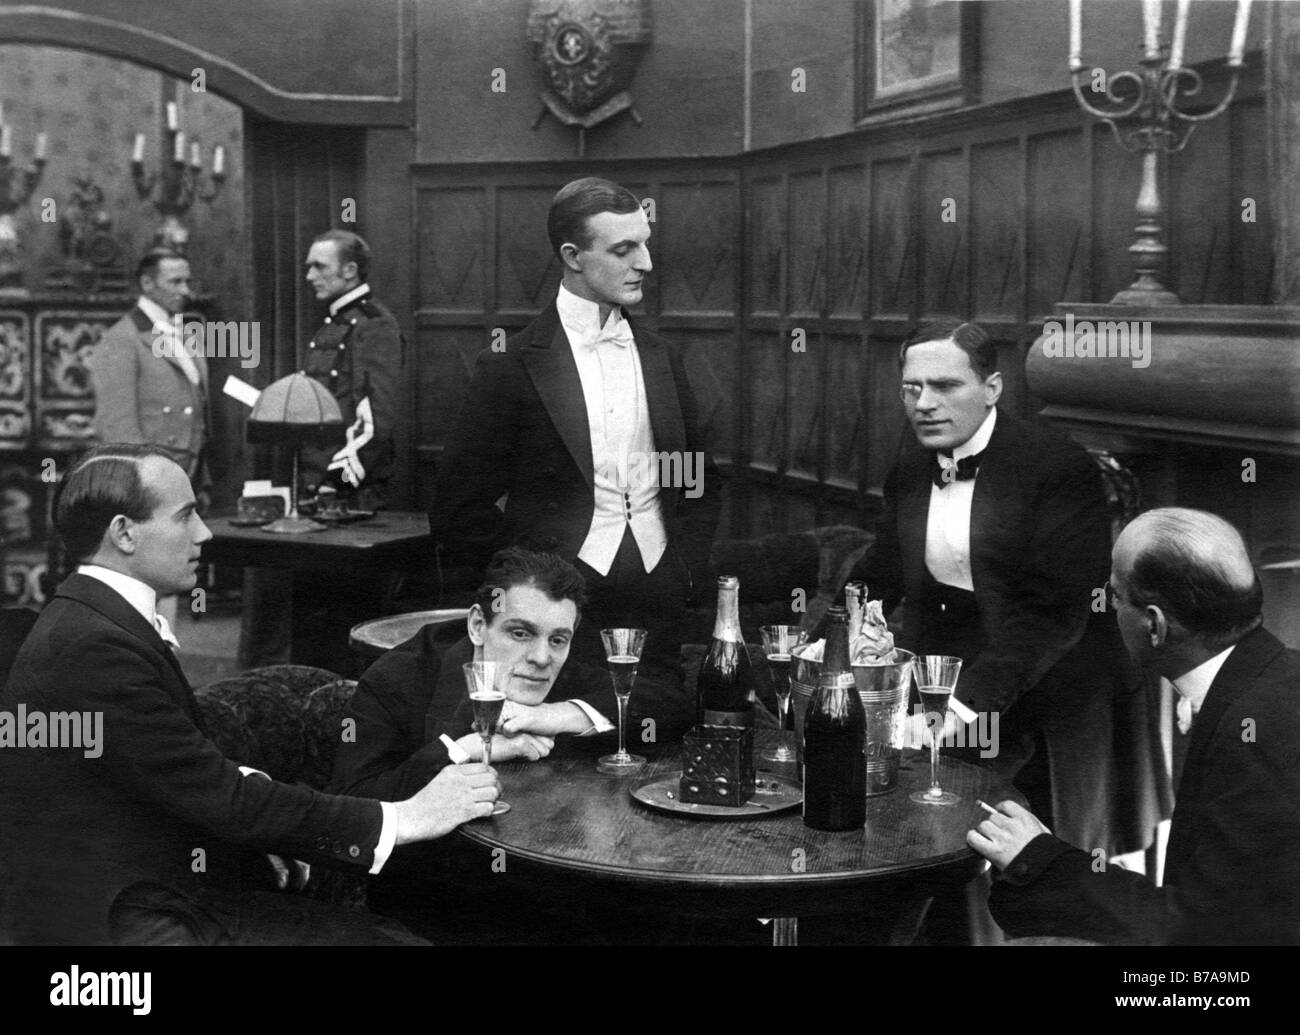 Foto histórica de caballeros, noche en el pub, ca. 1920 Foto de stock